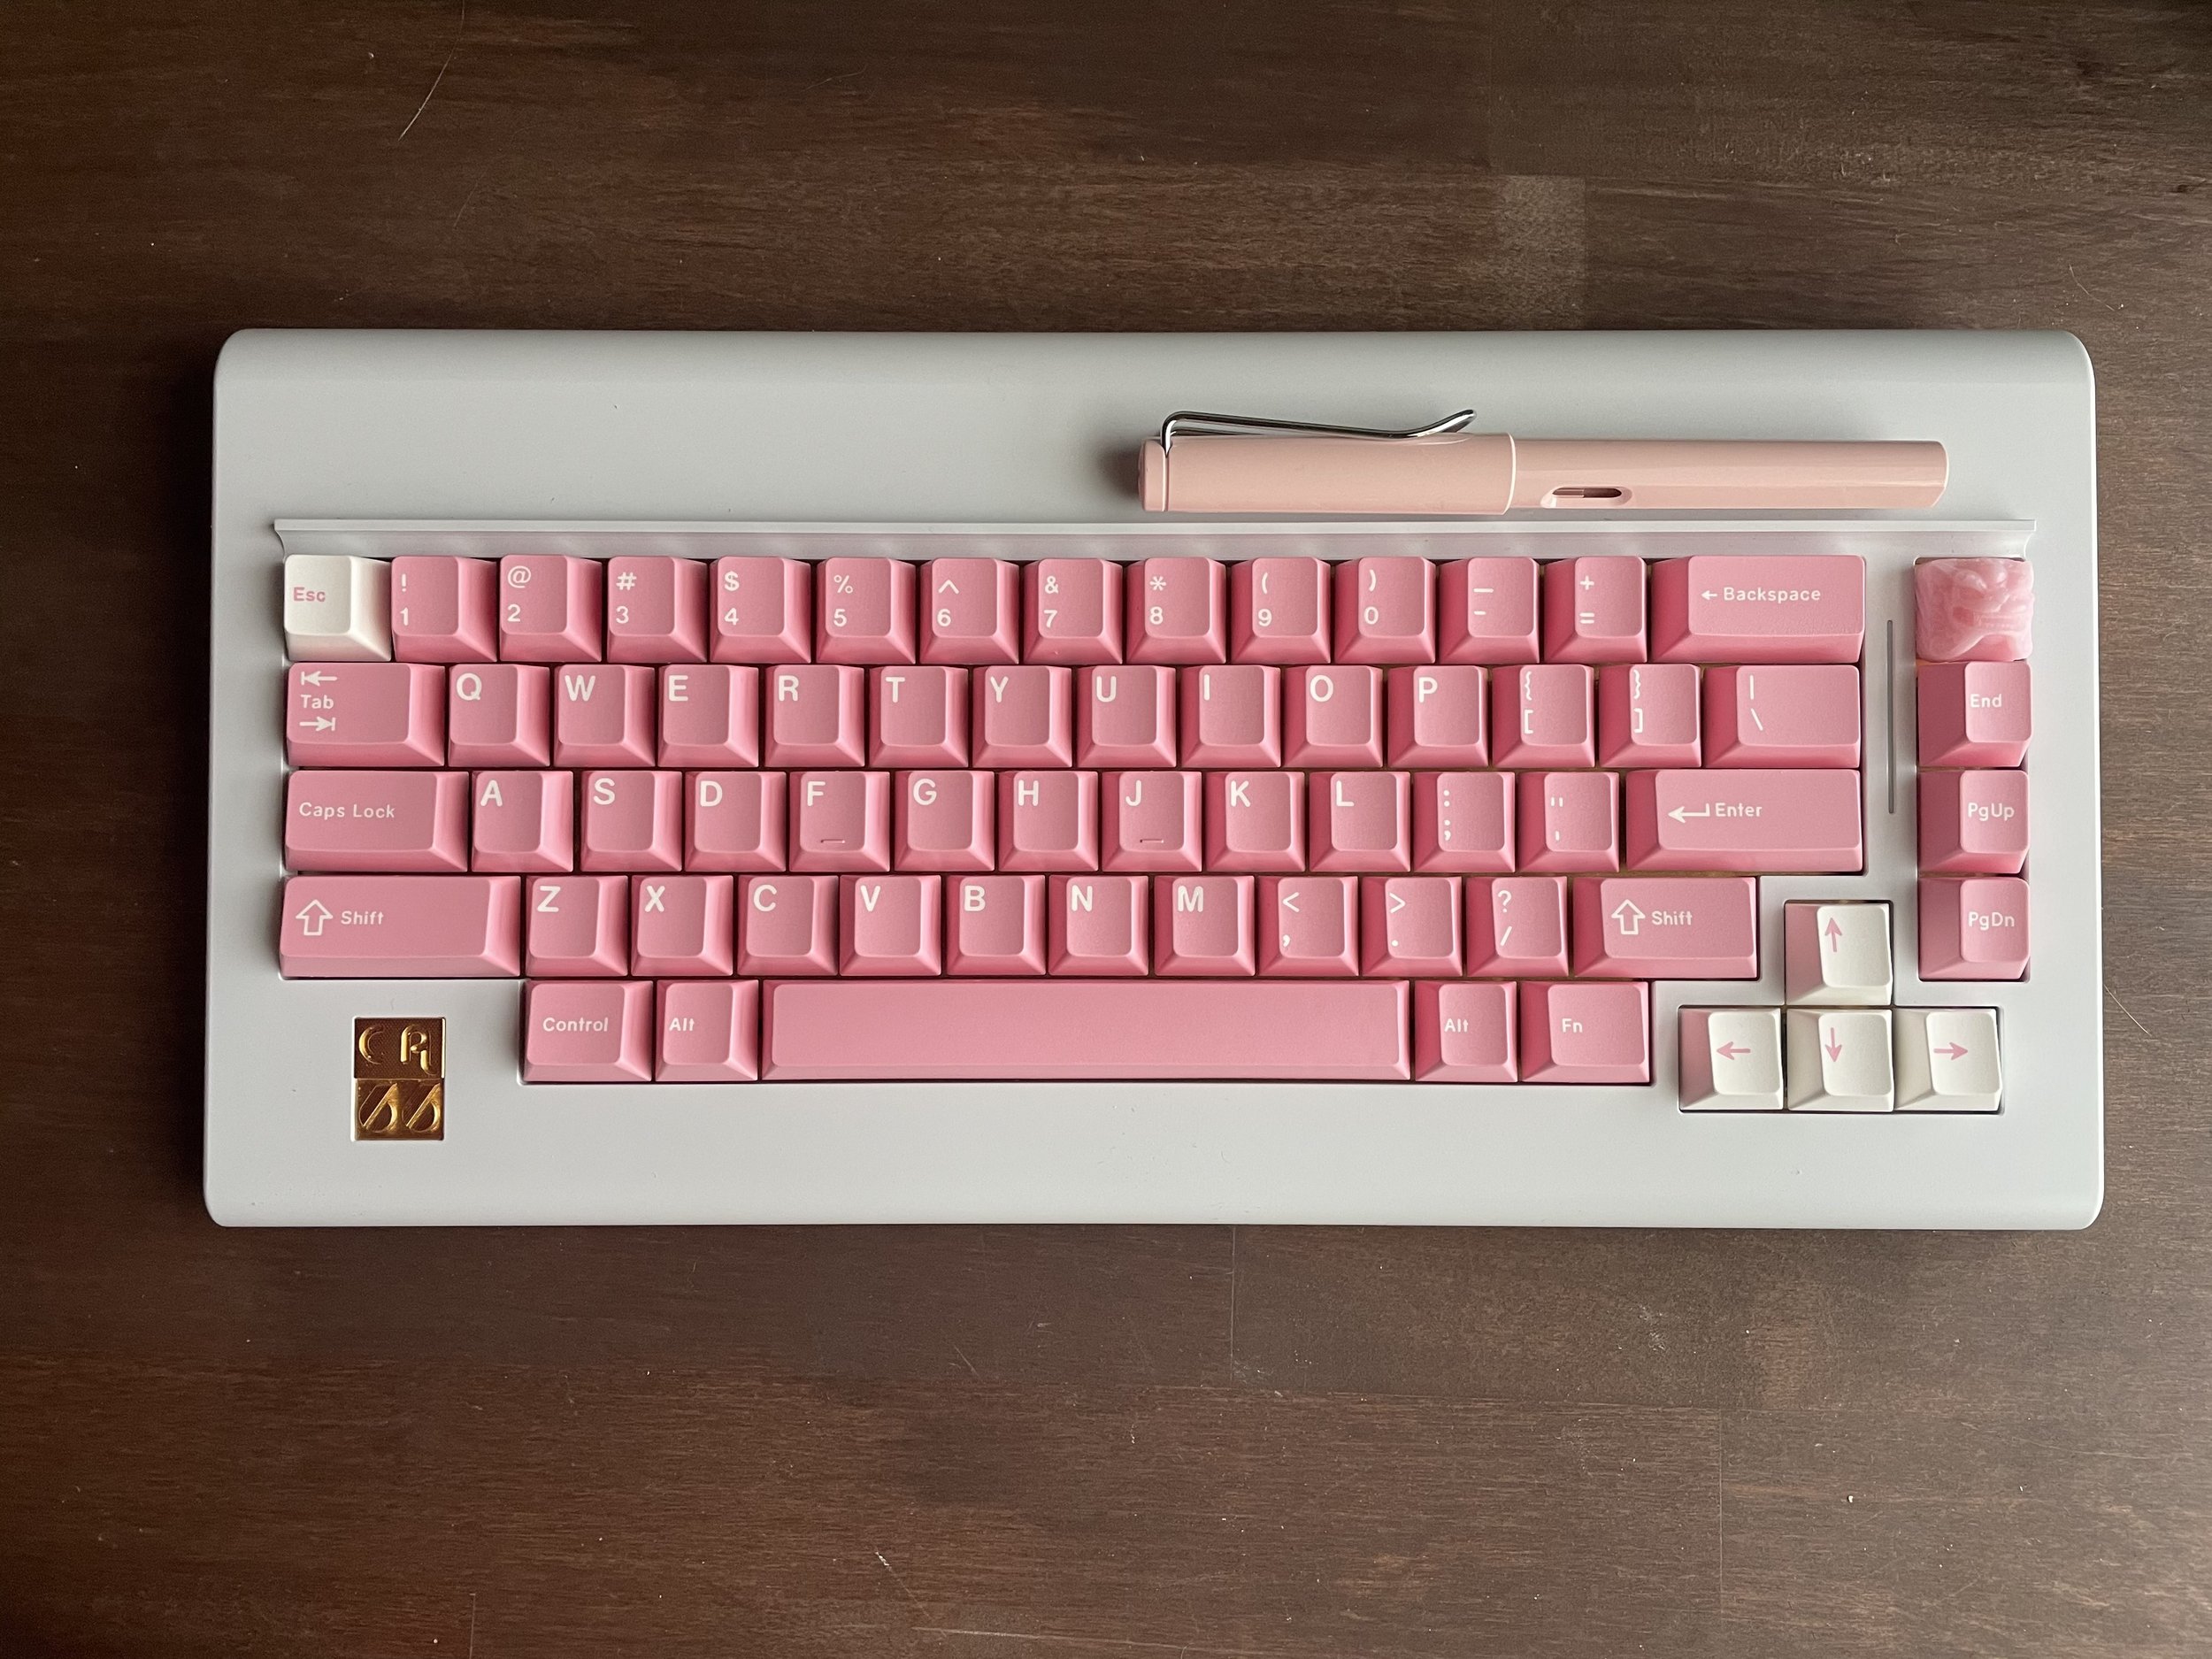  White CA66 with GMK Peach Blossom keycaps 